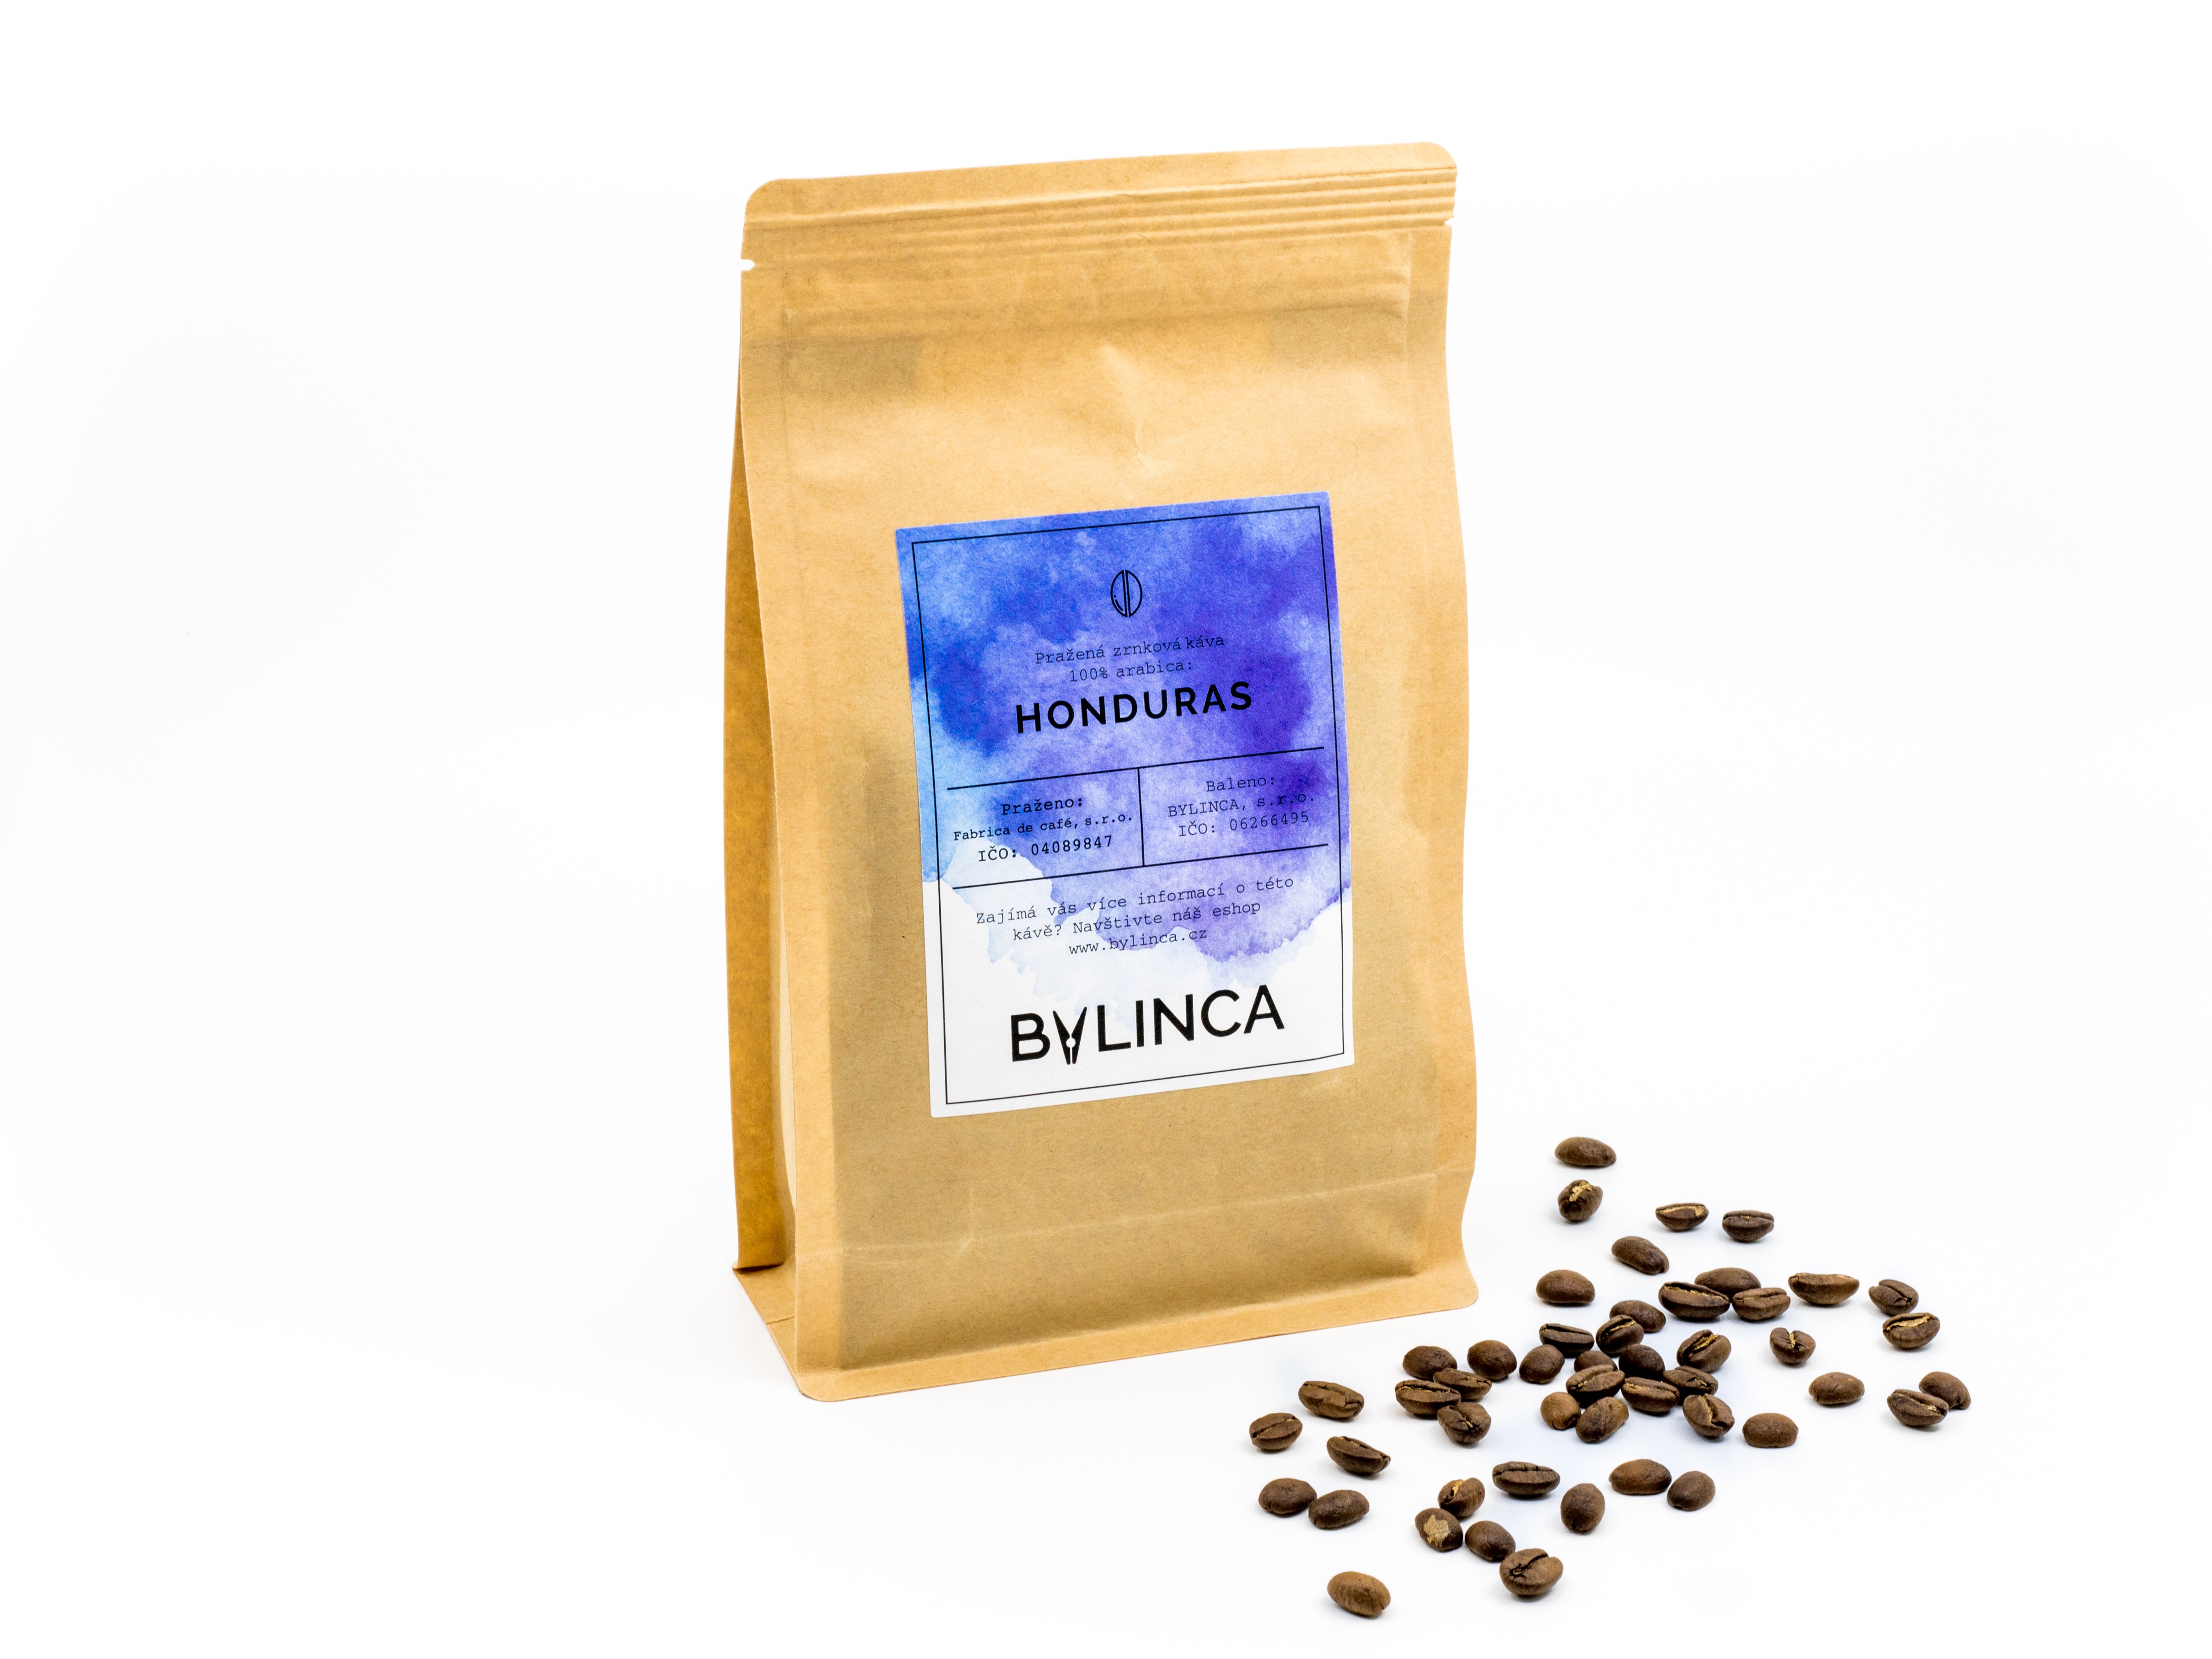 BYLINCA Zrnková káva: Honduras 100g, 250g, 500g, 1000g 1 ks: 1000g